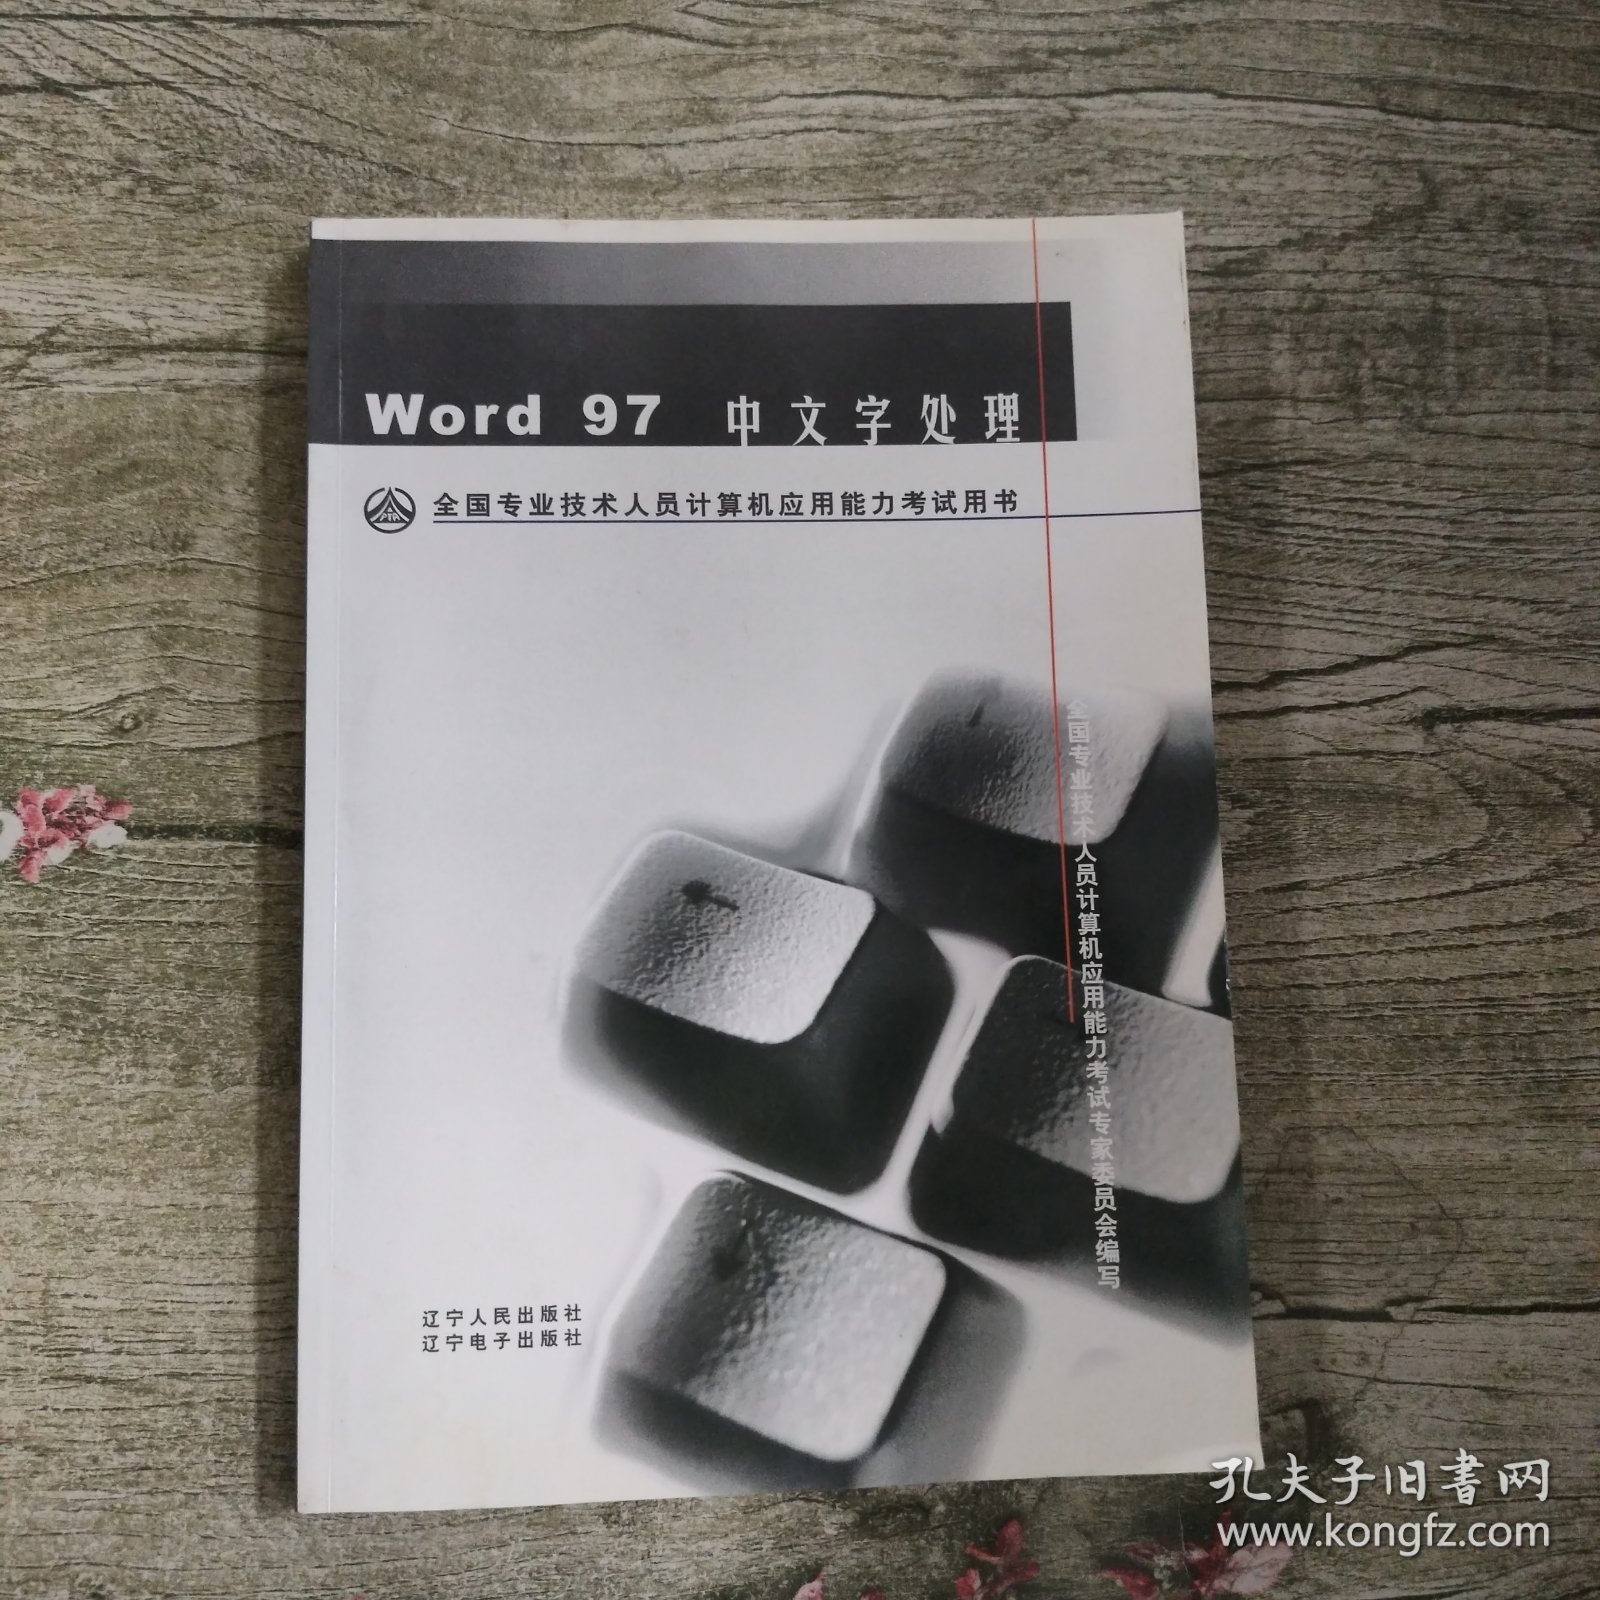 Word97中文字处理。